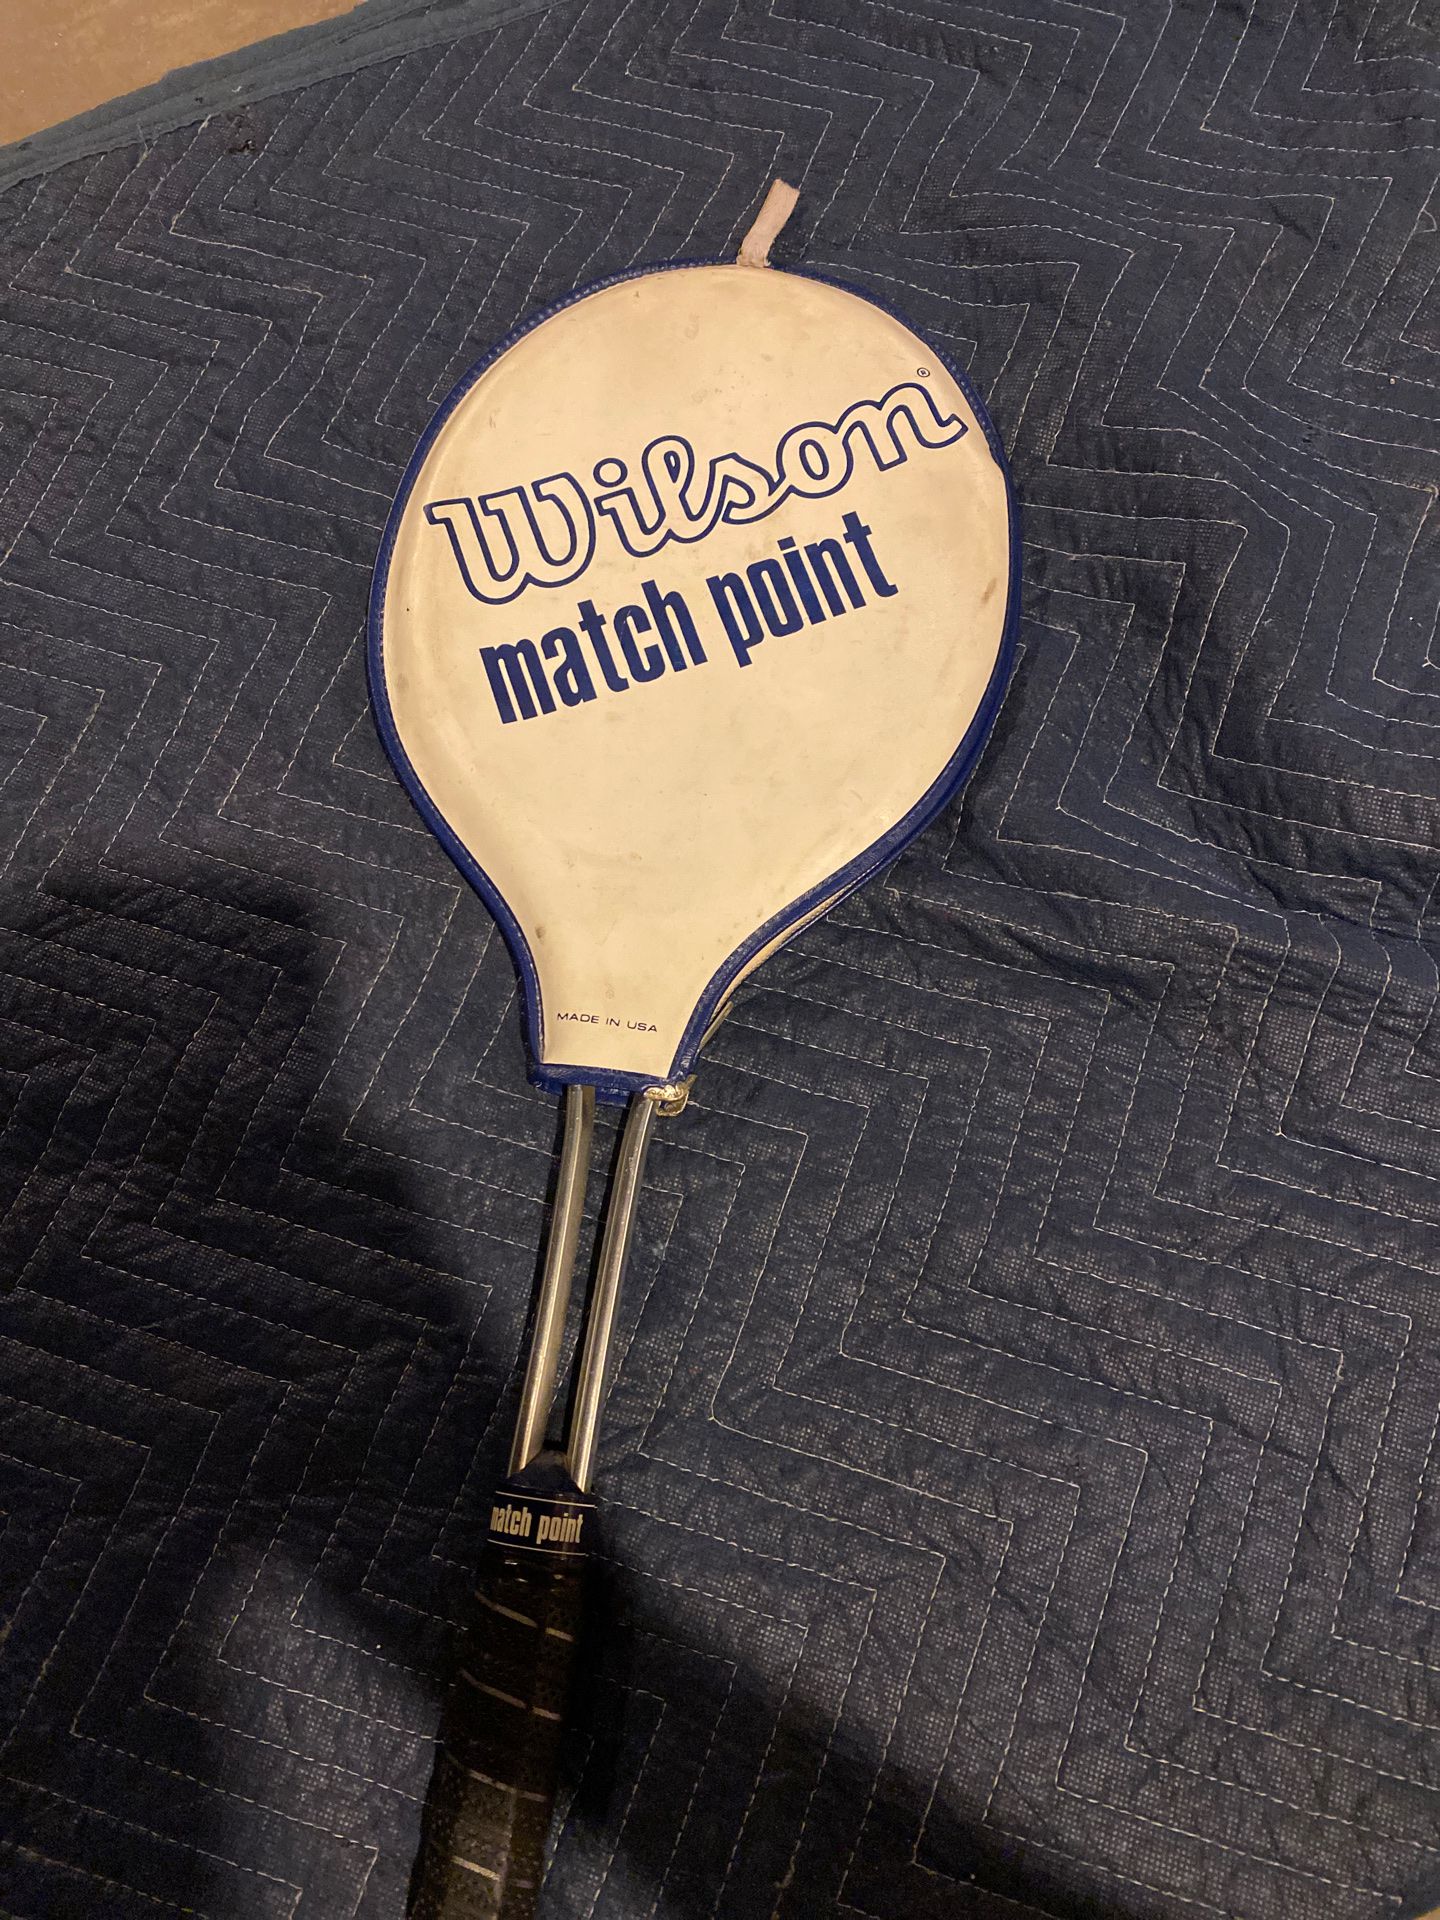 Wilson matchpoint tennis racket size 4 1/2